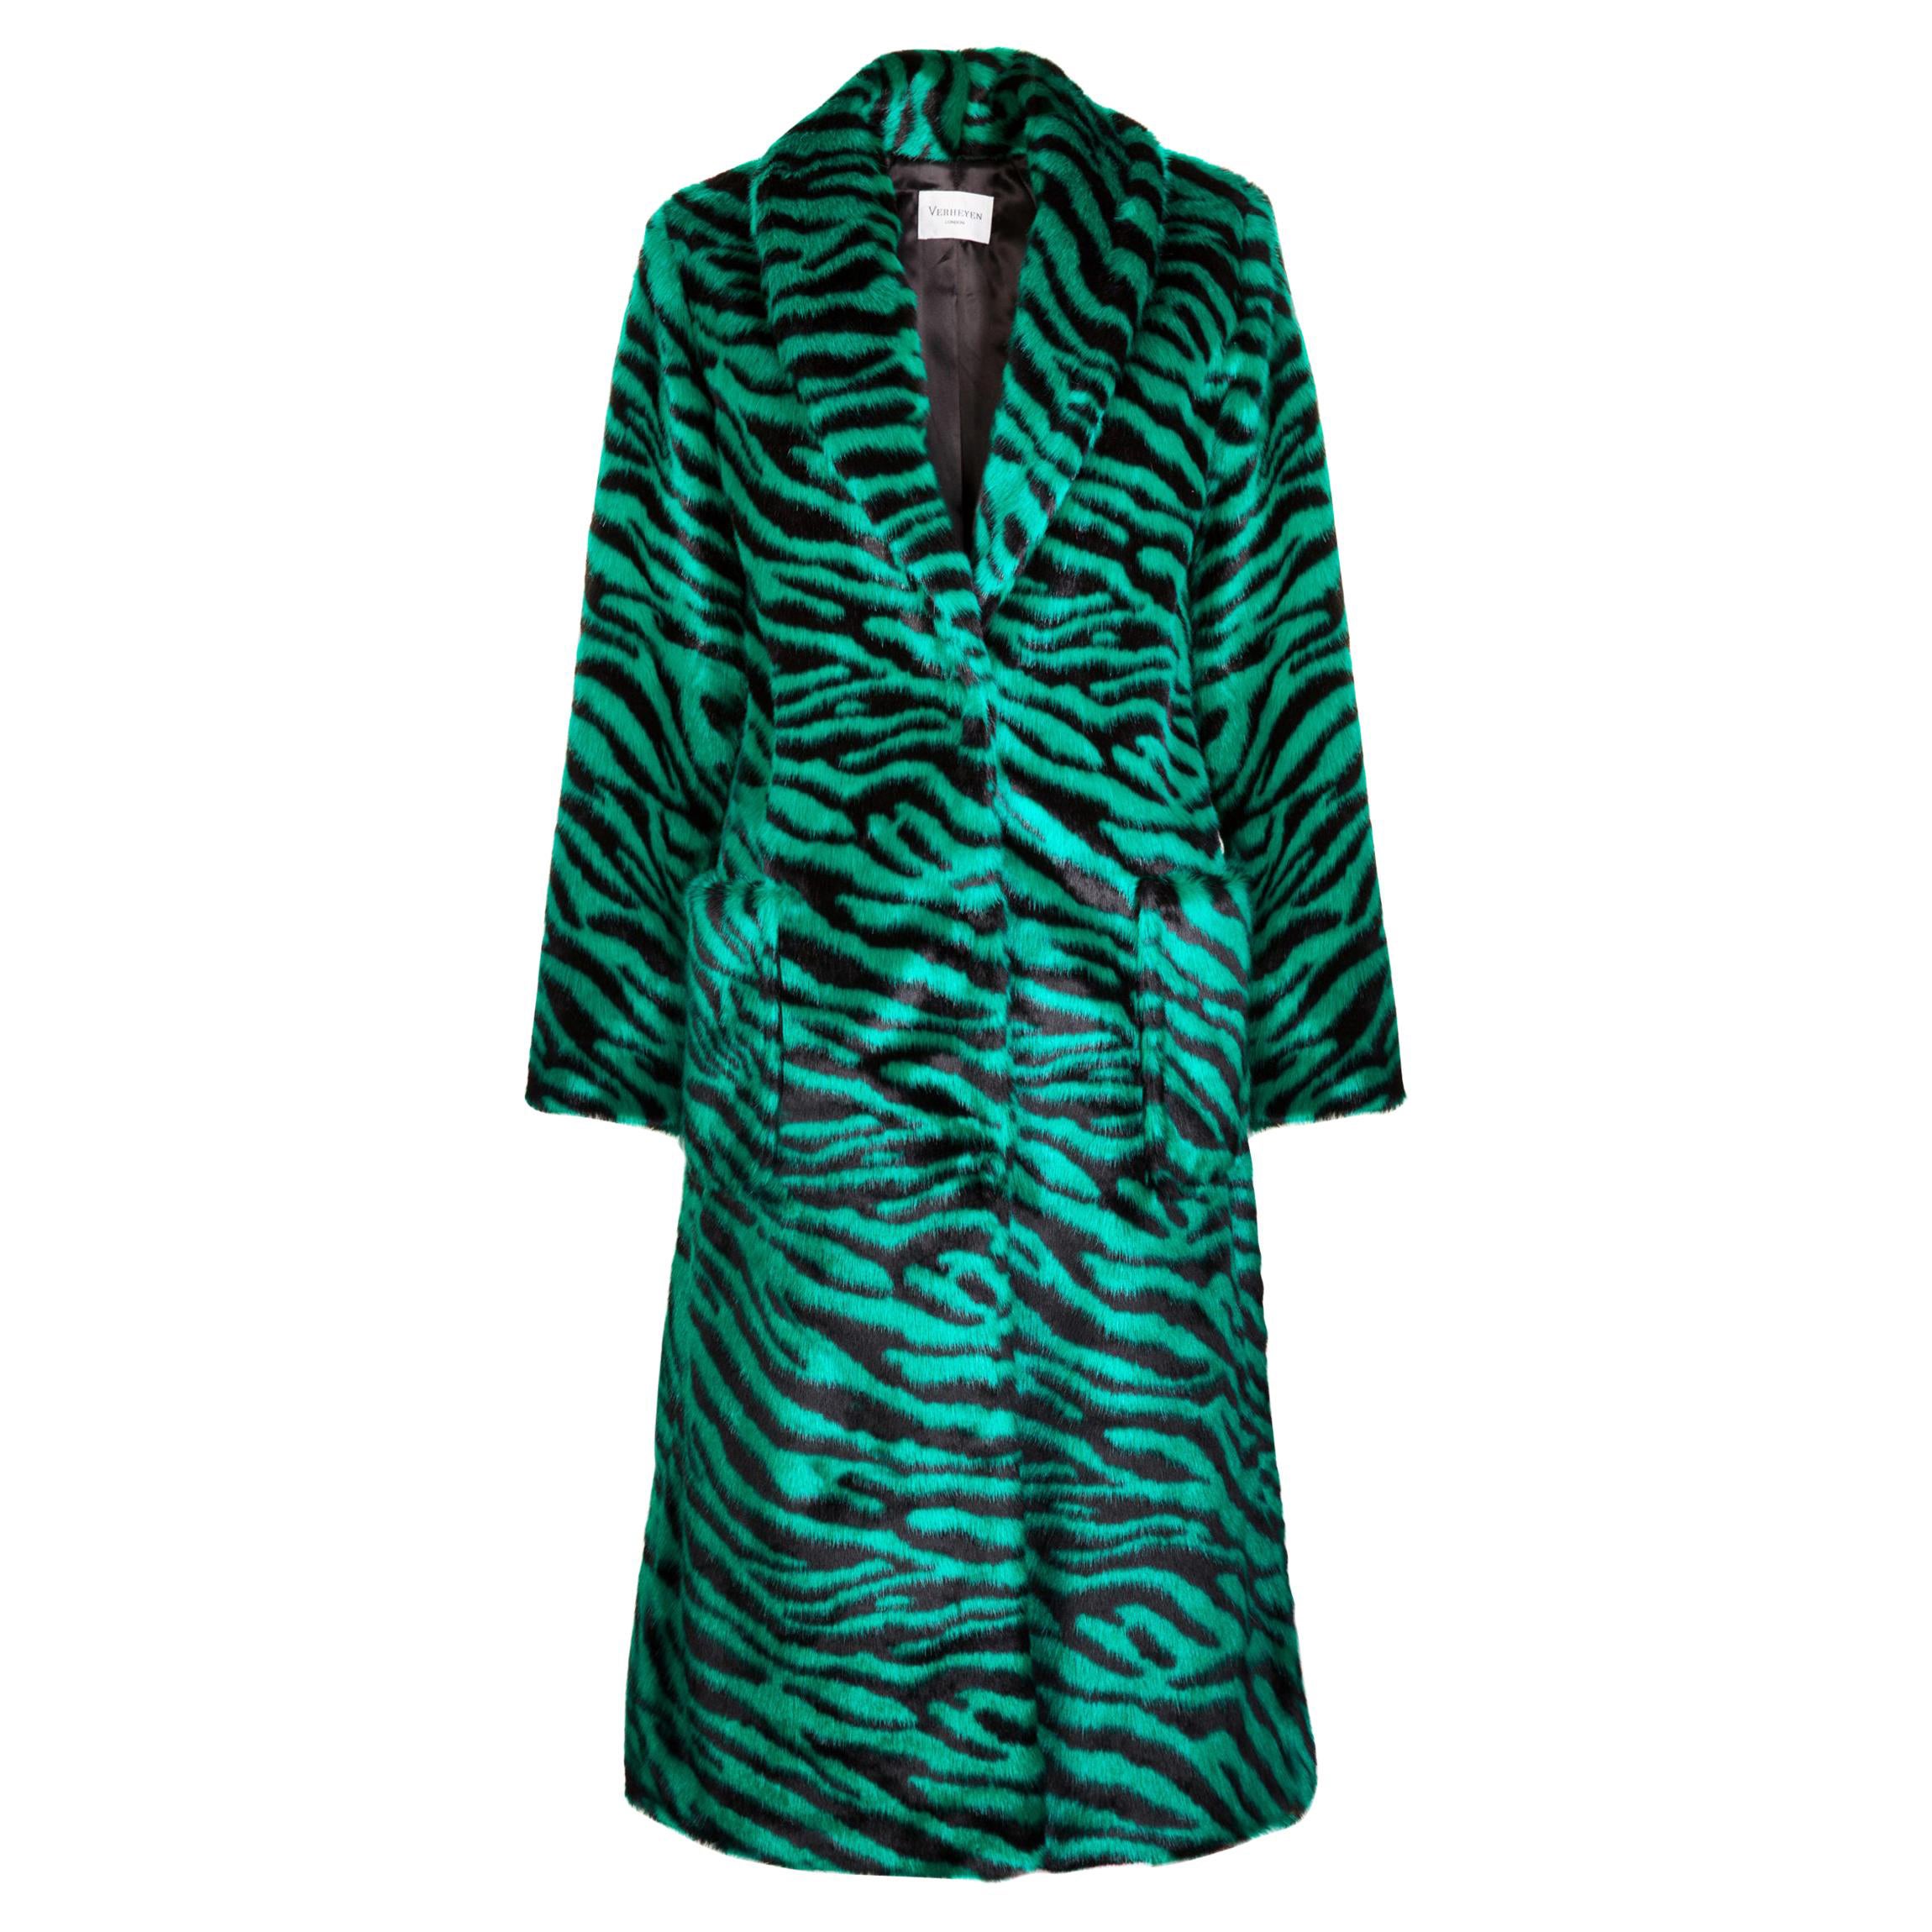 Verheyen London Manteau Esmeralda en fausse fourrure avec imprimé zébré vert émeraude taille UK 10